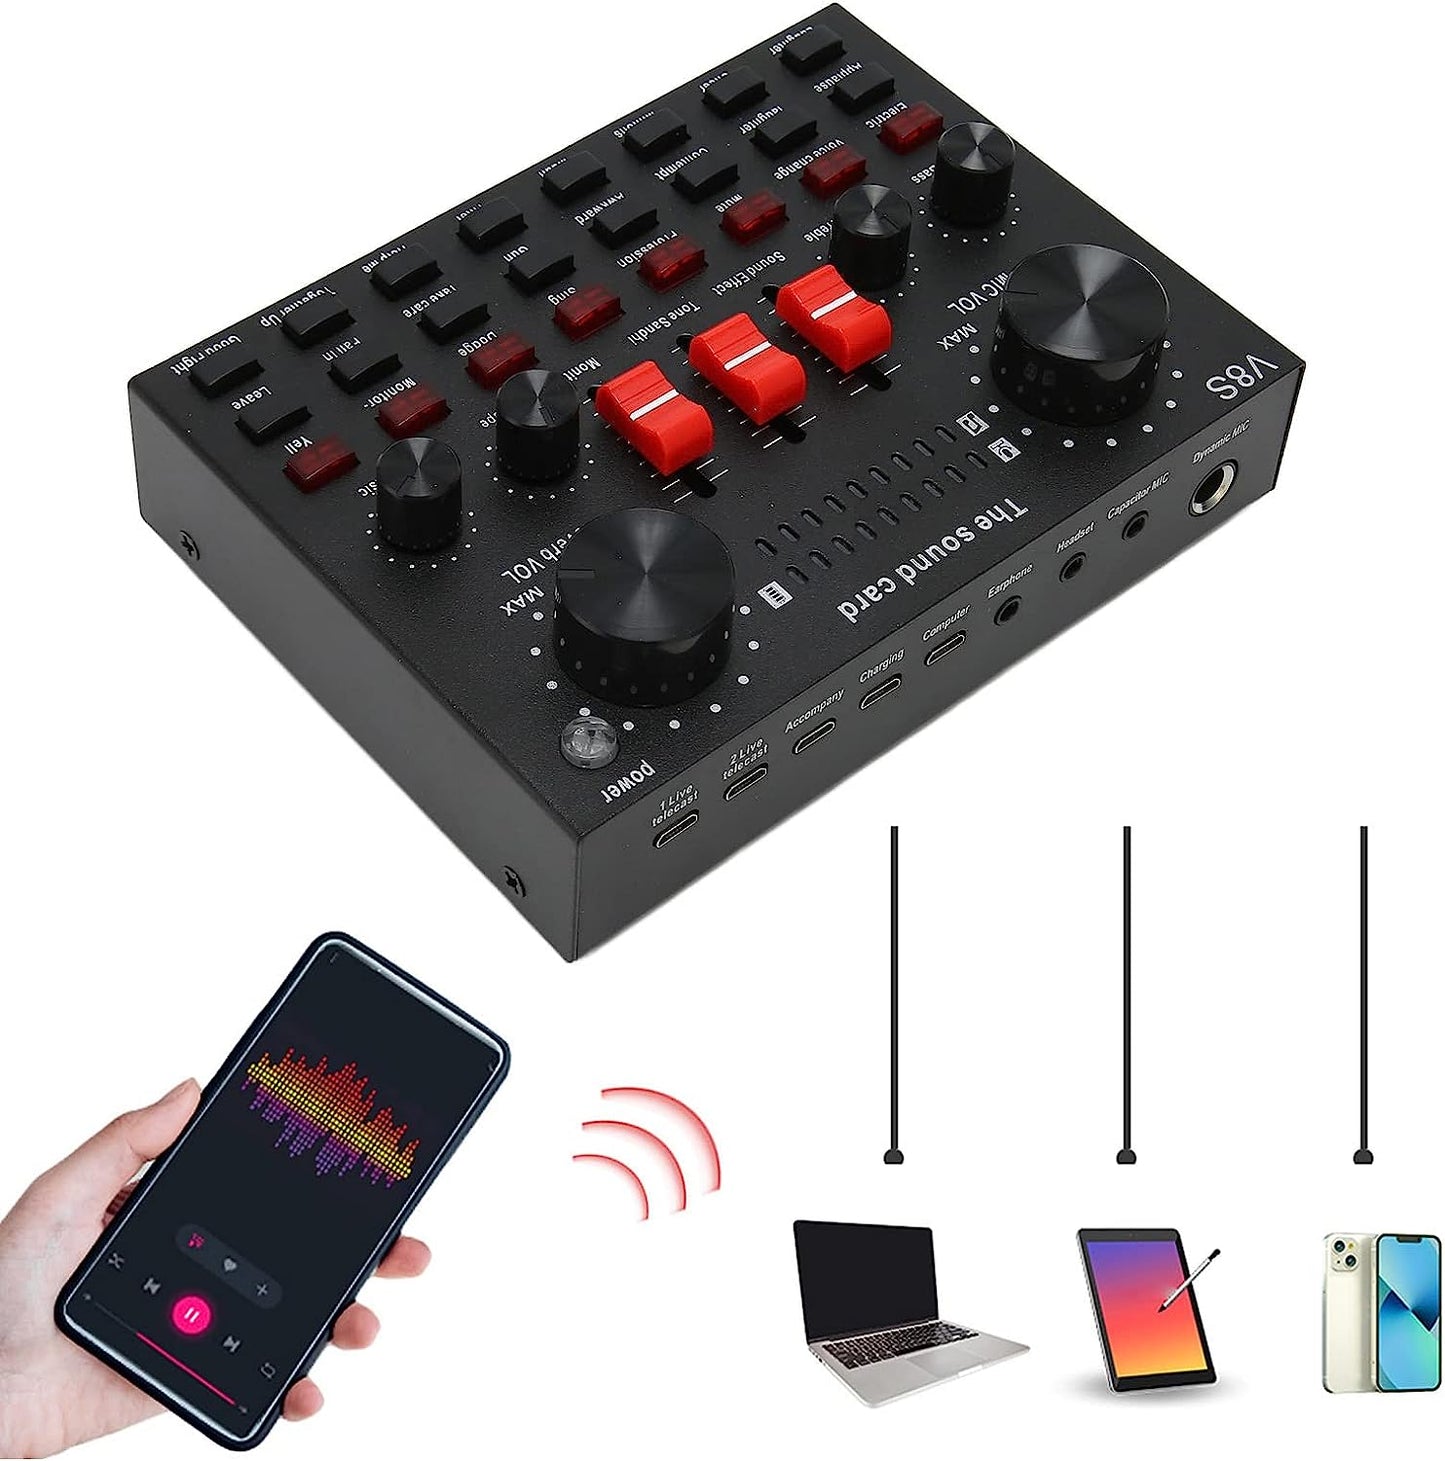 Live Sound Card, 16 Sound Effects V8S Voice Changer Sound Card Wireless Connection, 8 Fun Modes, Sound Mixer Board for Karaoke, Light Design (Black)